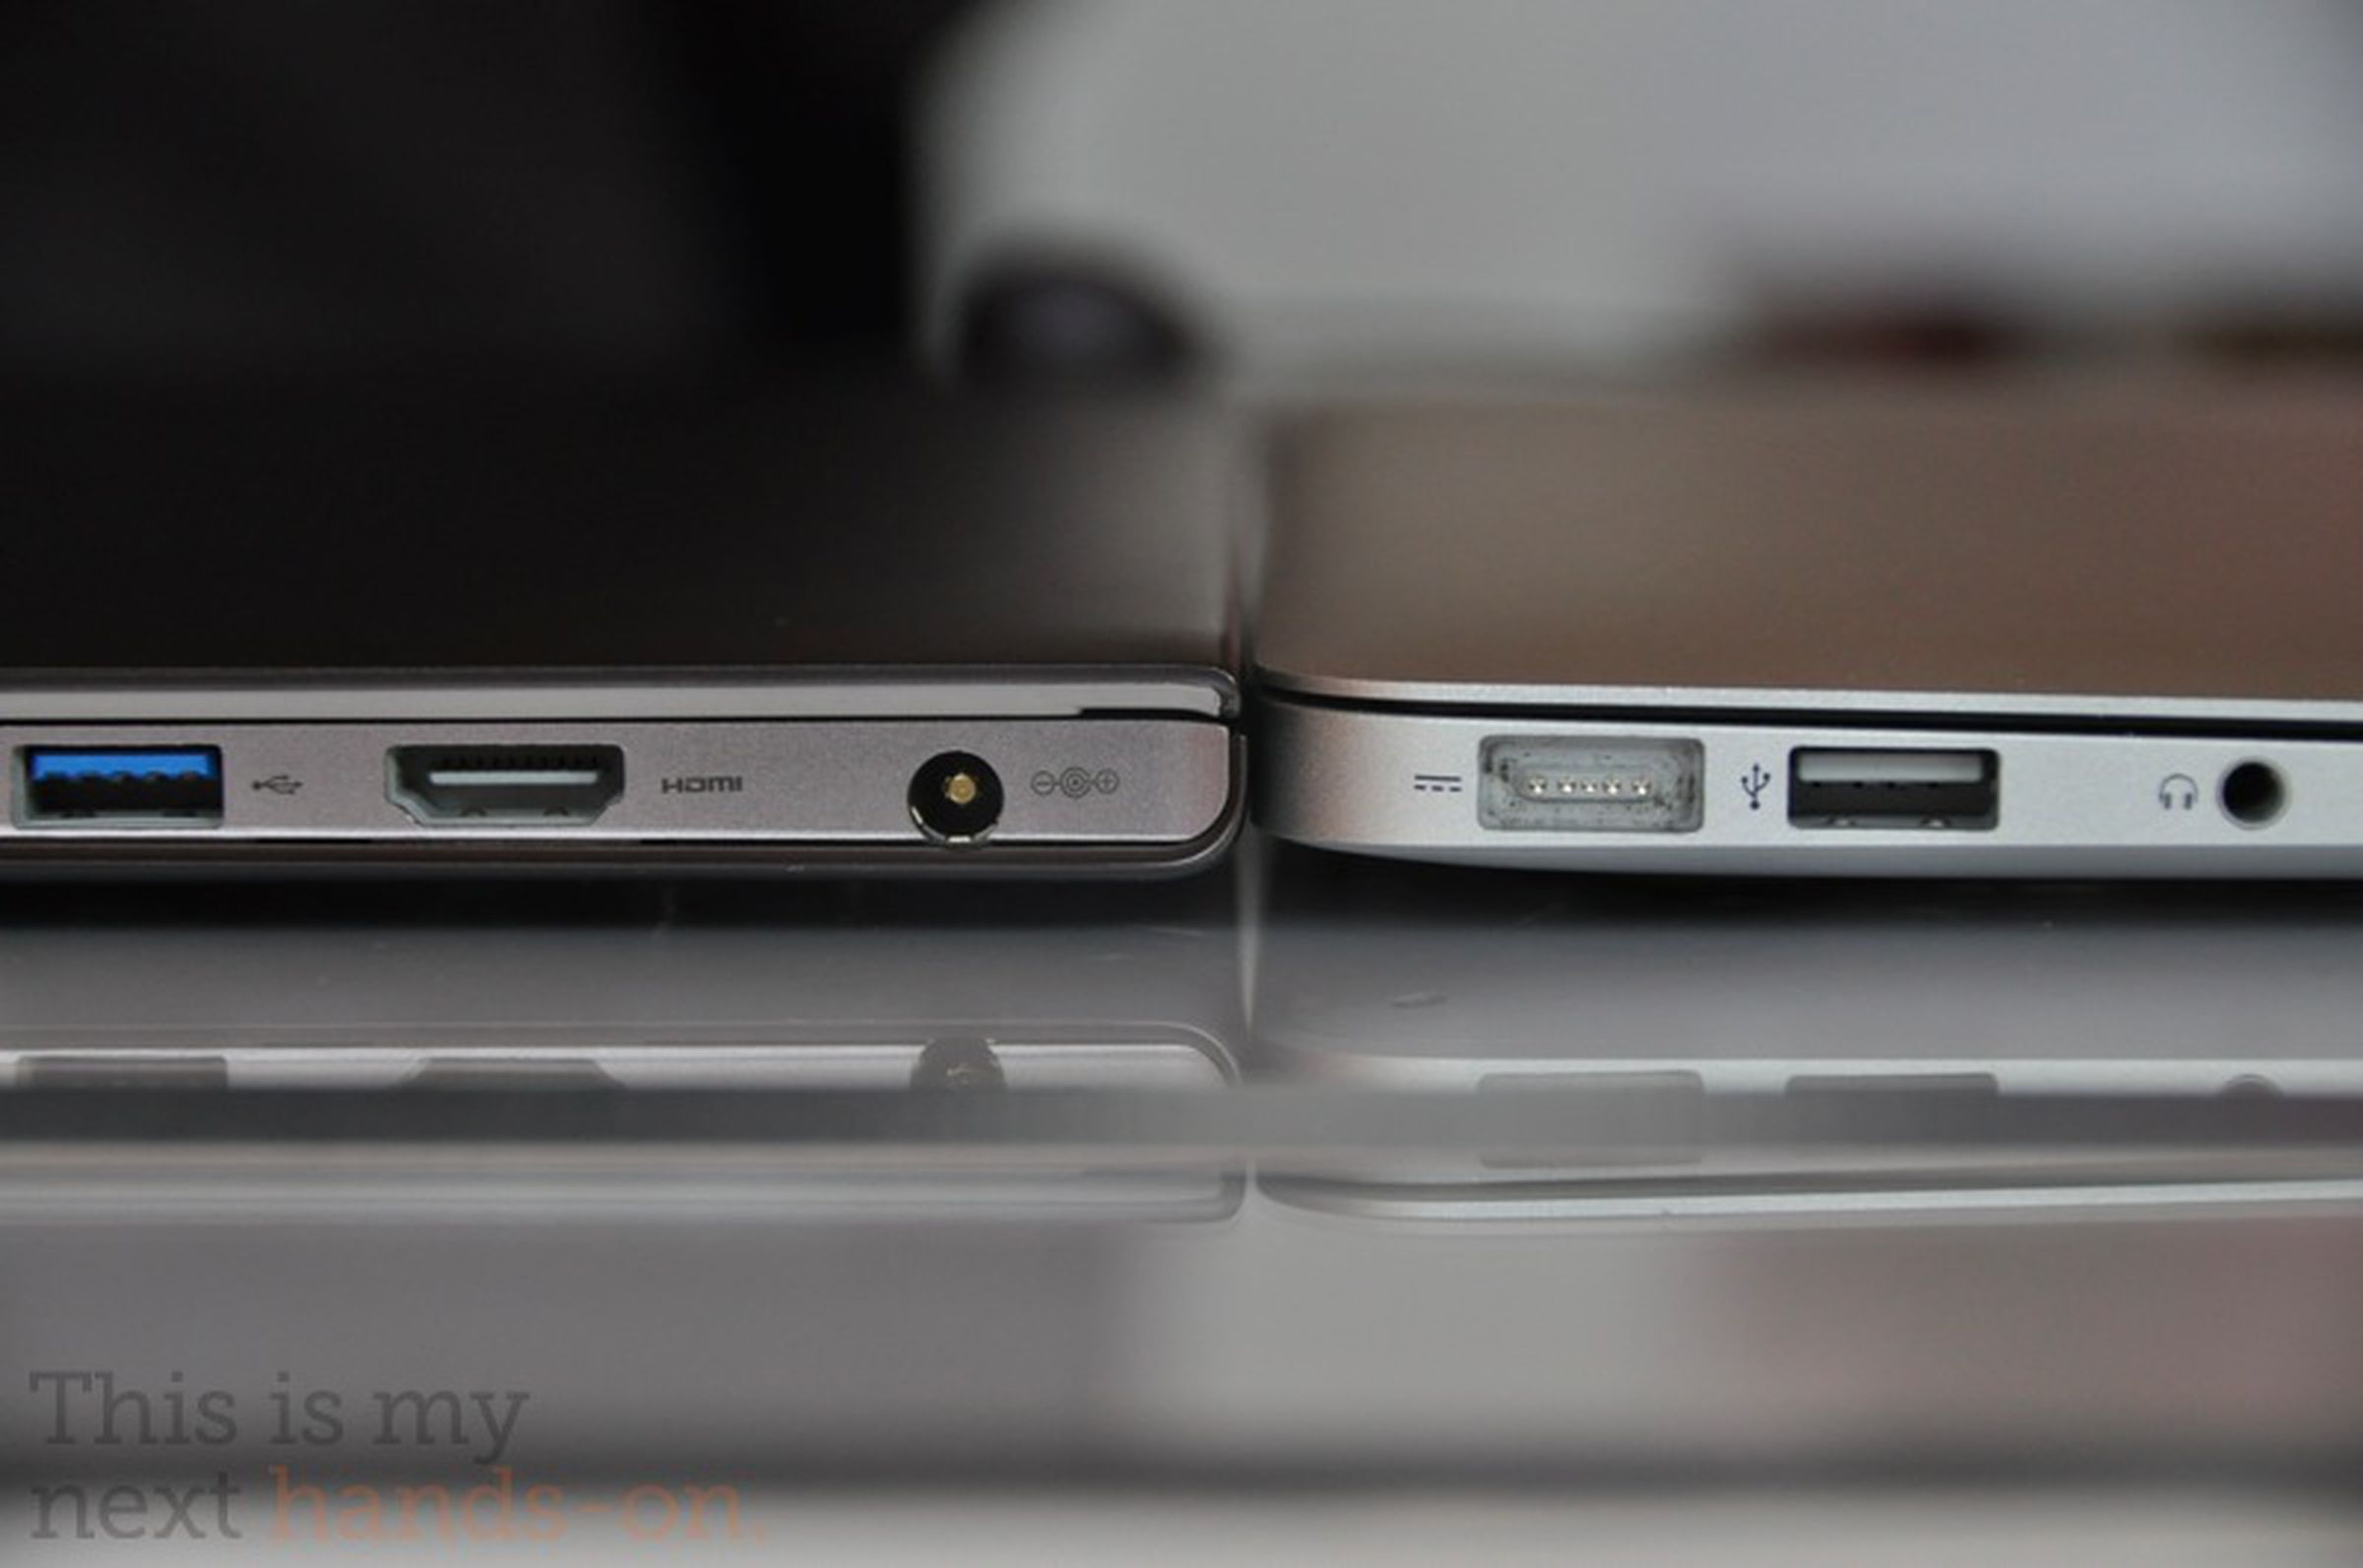 MacBook Air vs. Lenovo IdeaPad U300s photos